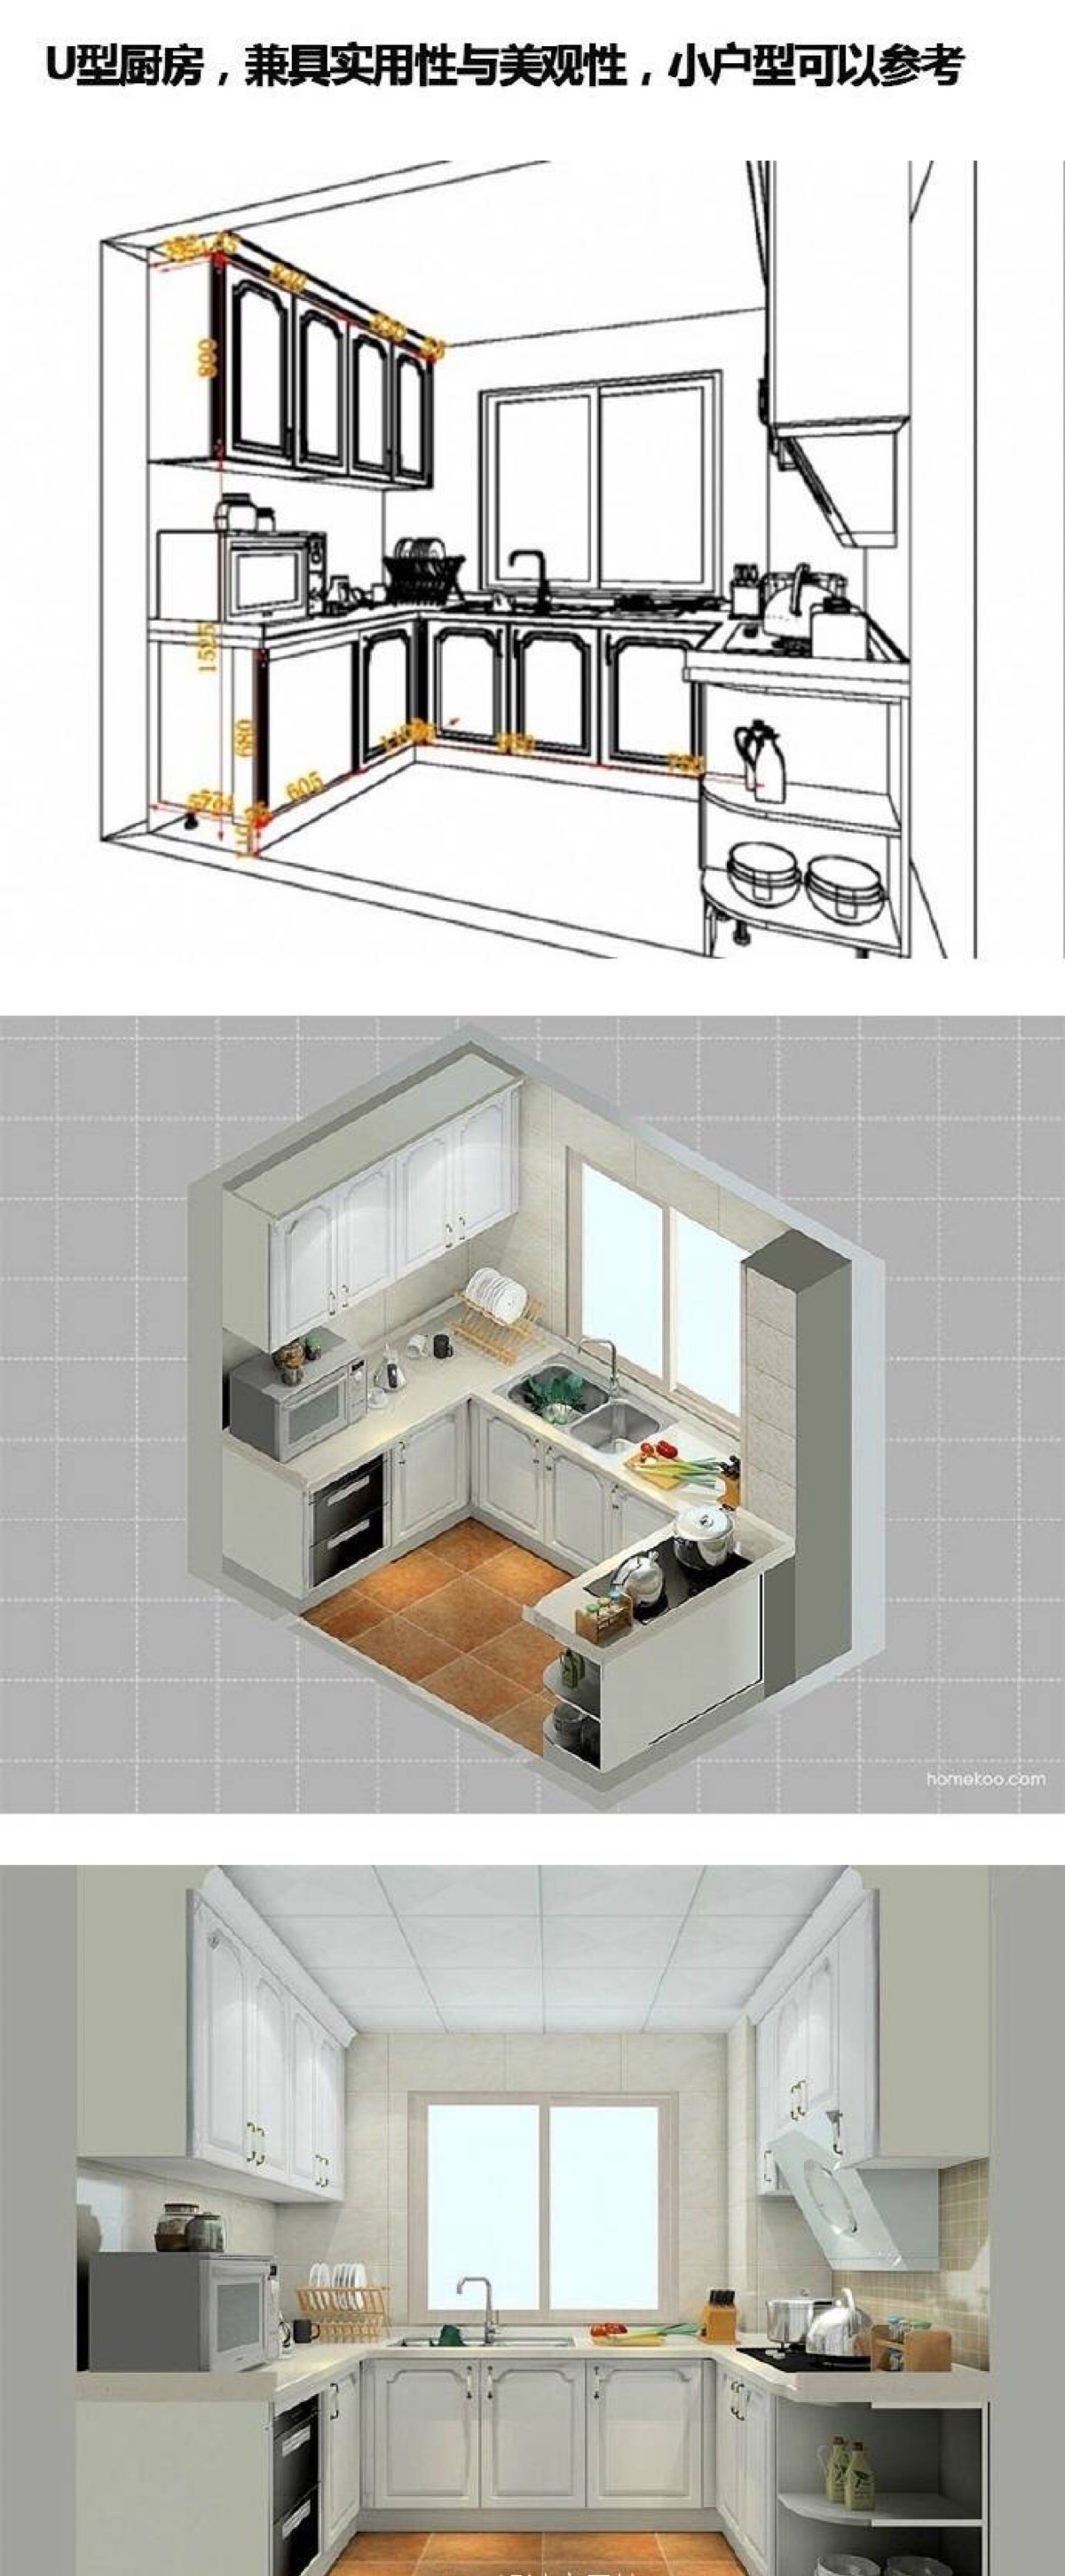 u型厨房平面图布局图片